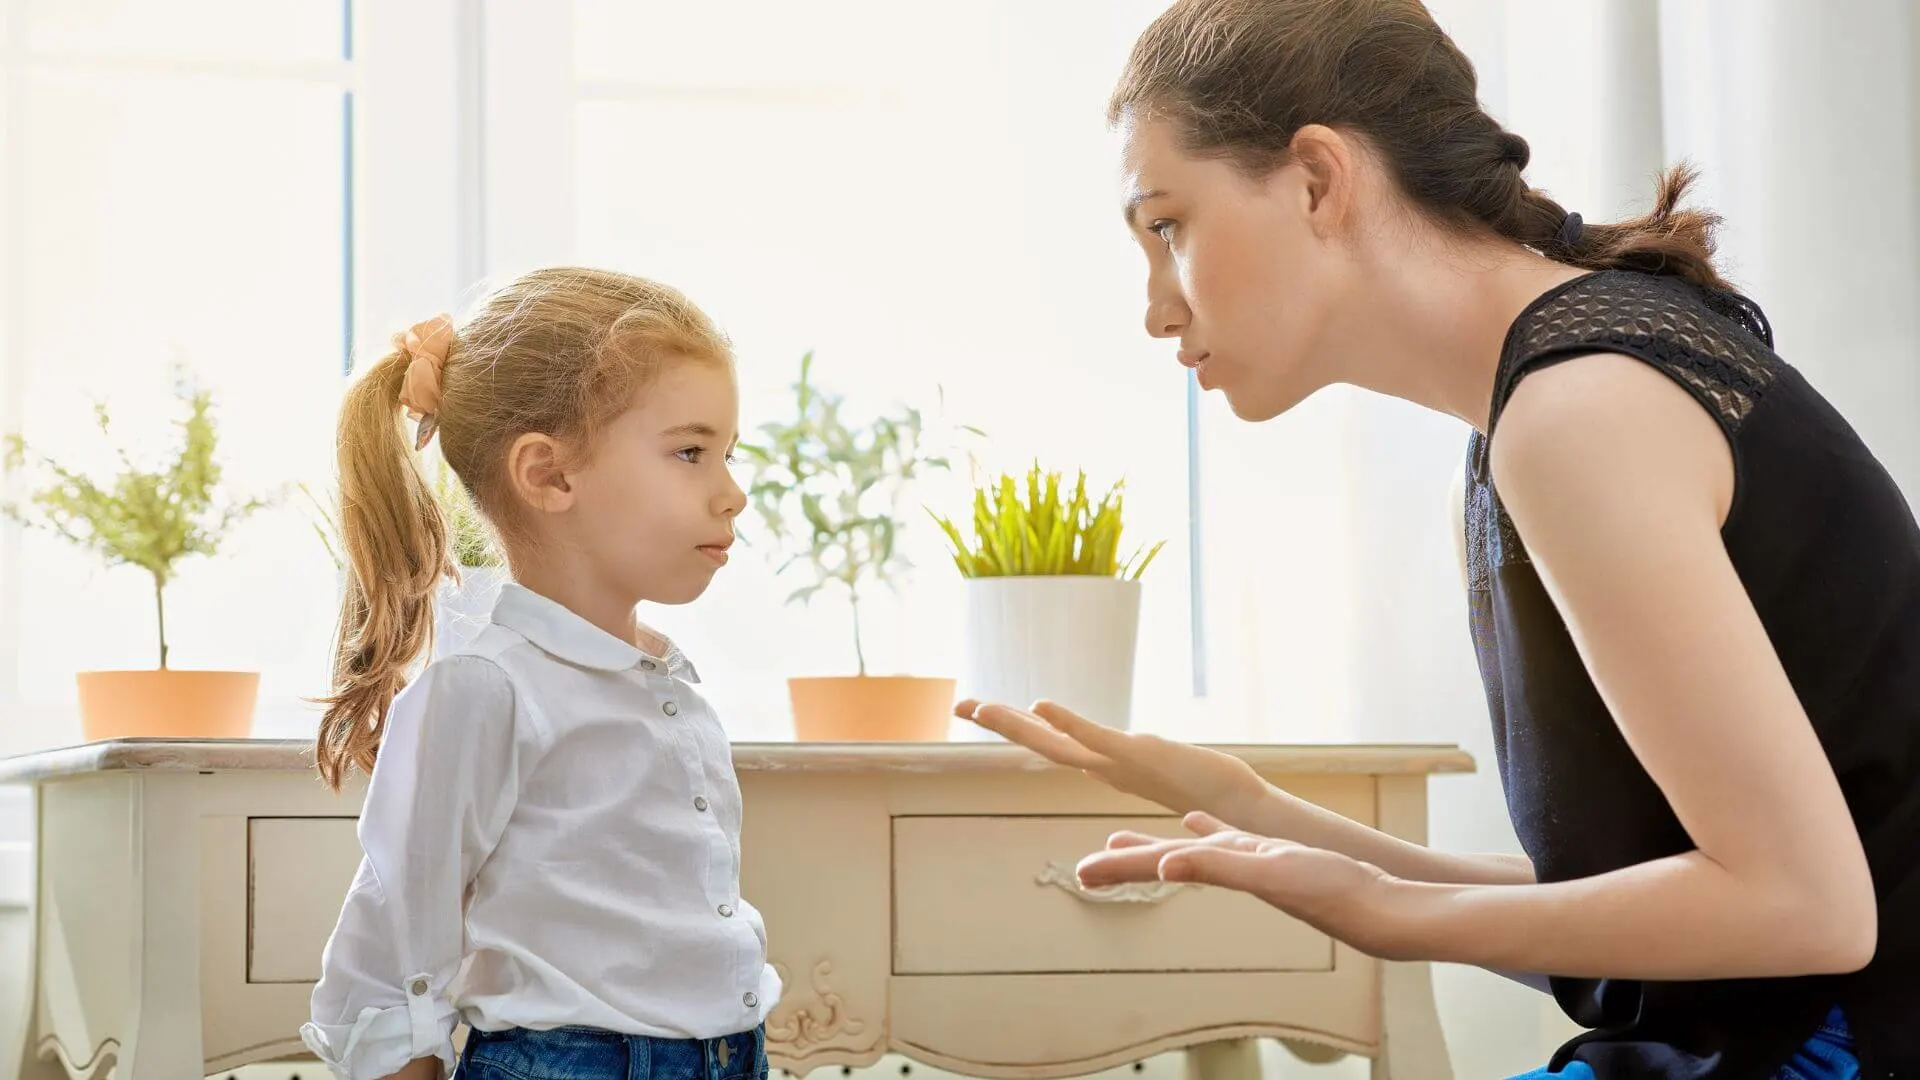 healthy ways to discipline a child